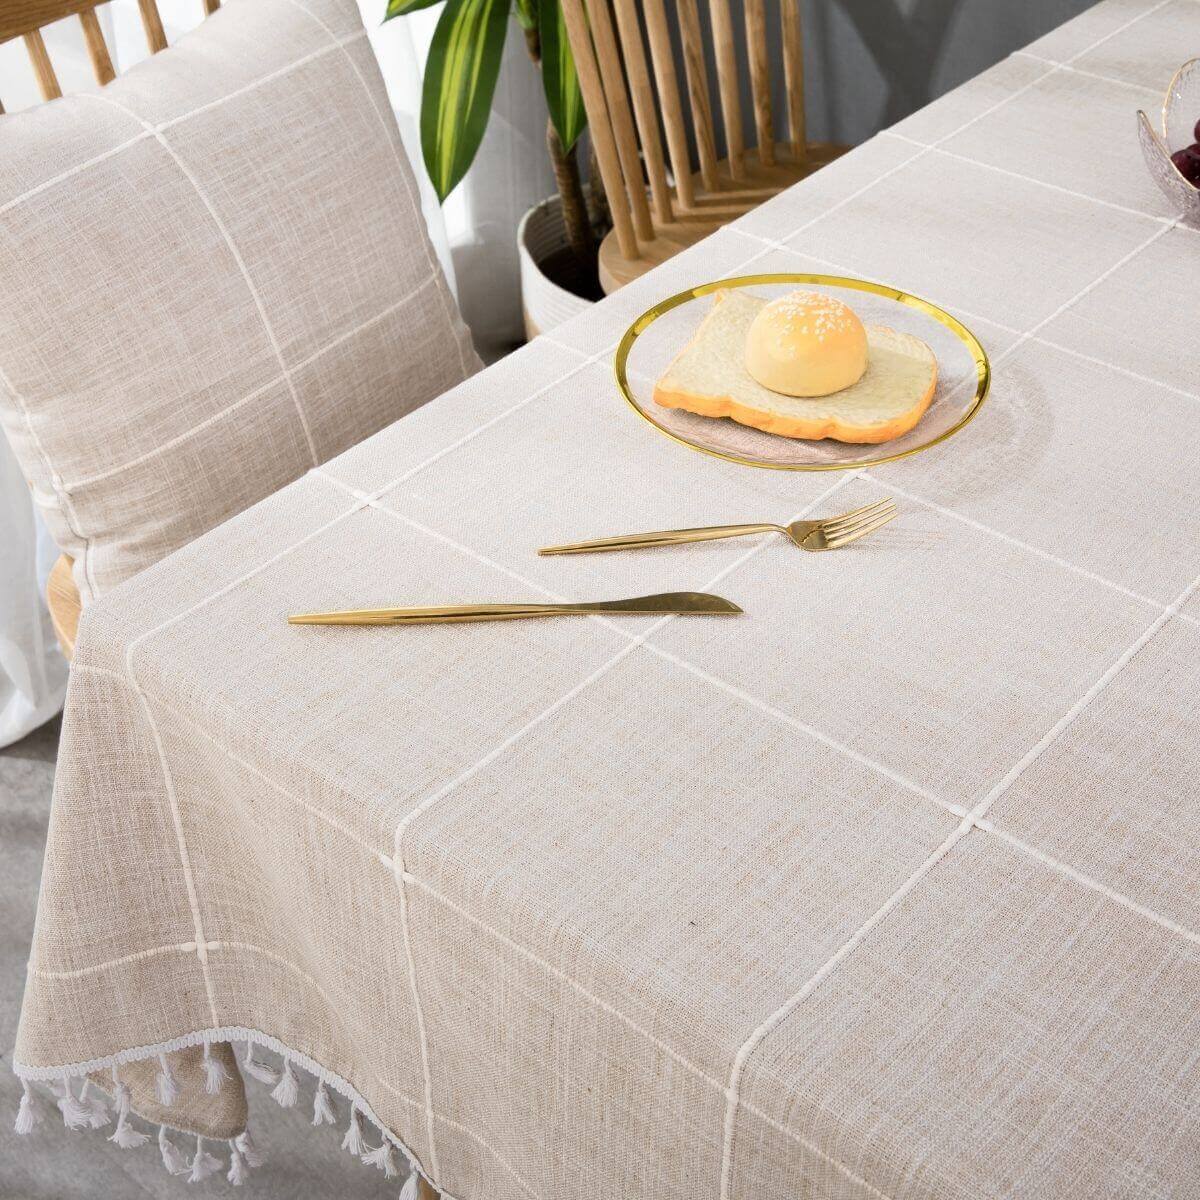 SASTYBALE beige linen table cloths